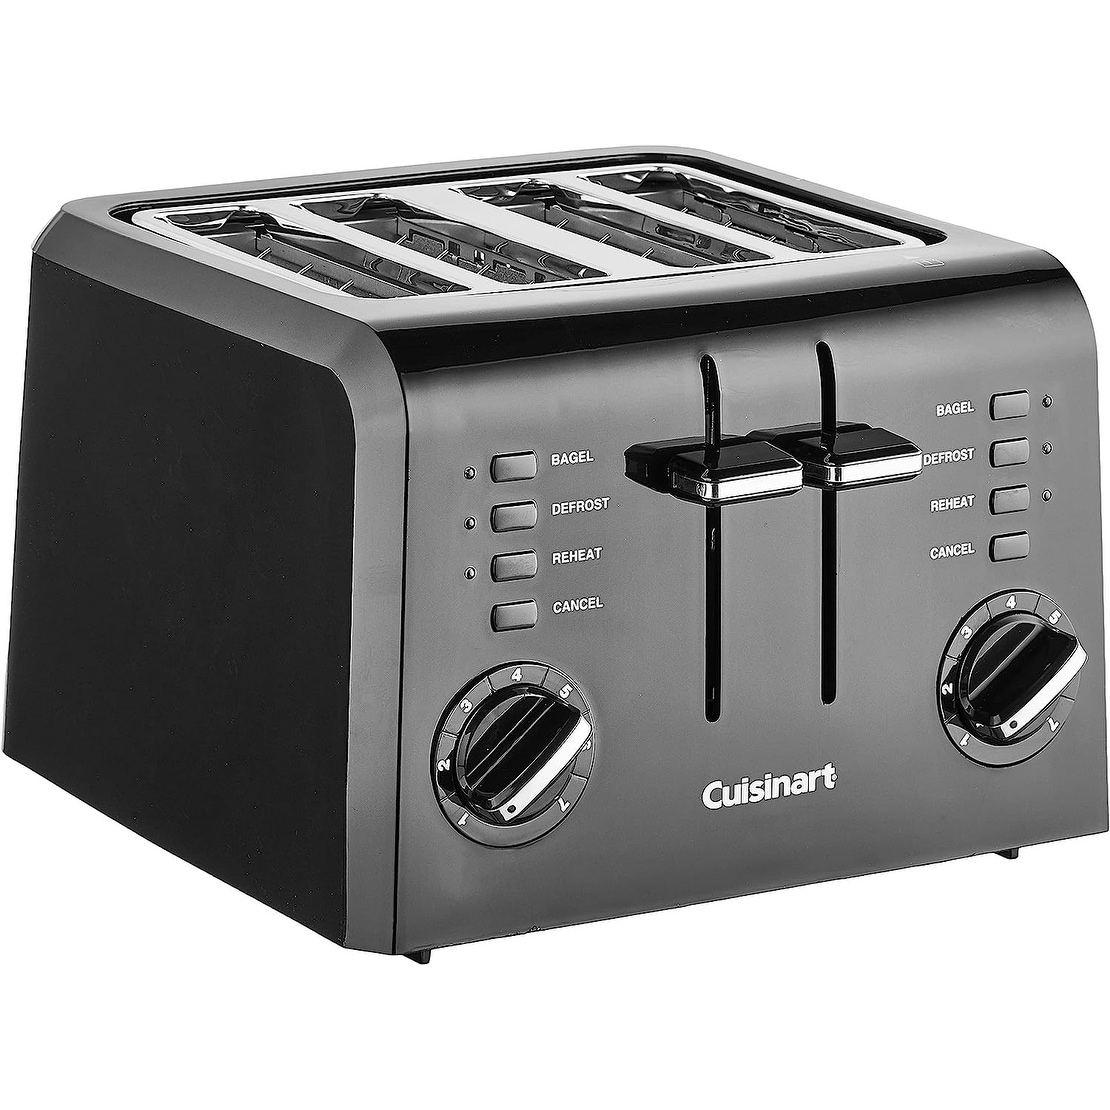 Cuisinart CPT-180MRP1 Metal Classic Toaster 4-Slice - Metallic Red